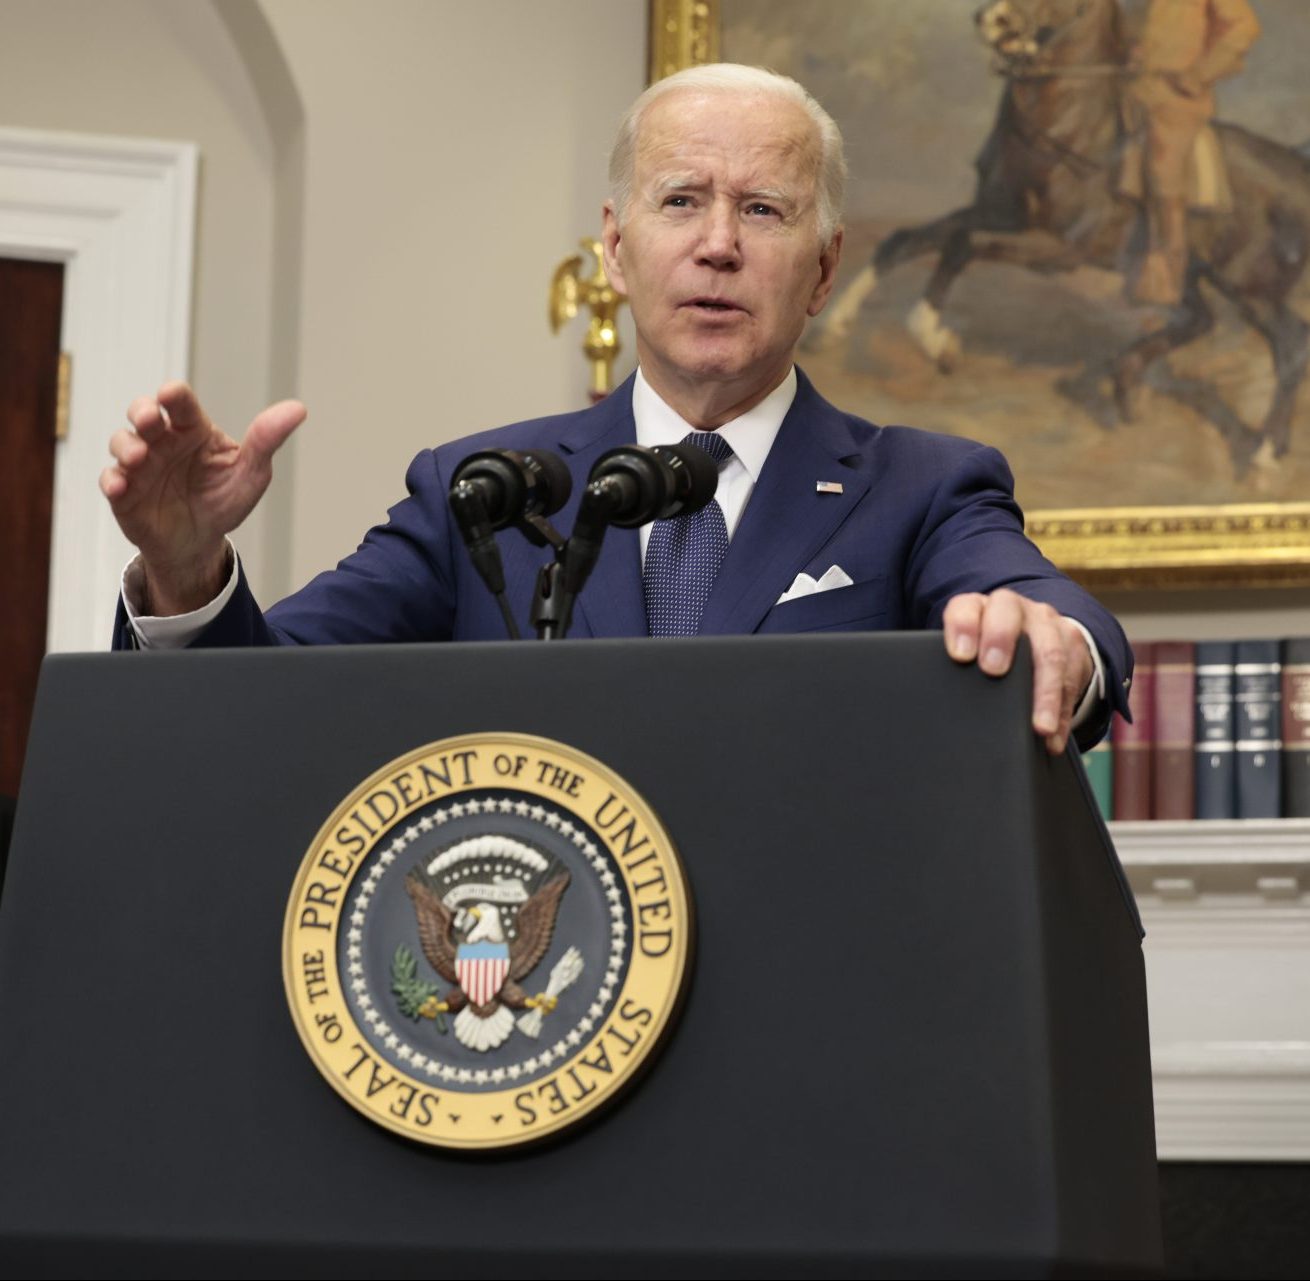 President Biden Calls On Congress To Pass Legislation On Gun Control Following Uvalde Mass Shooting